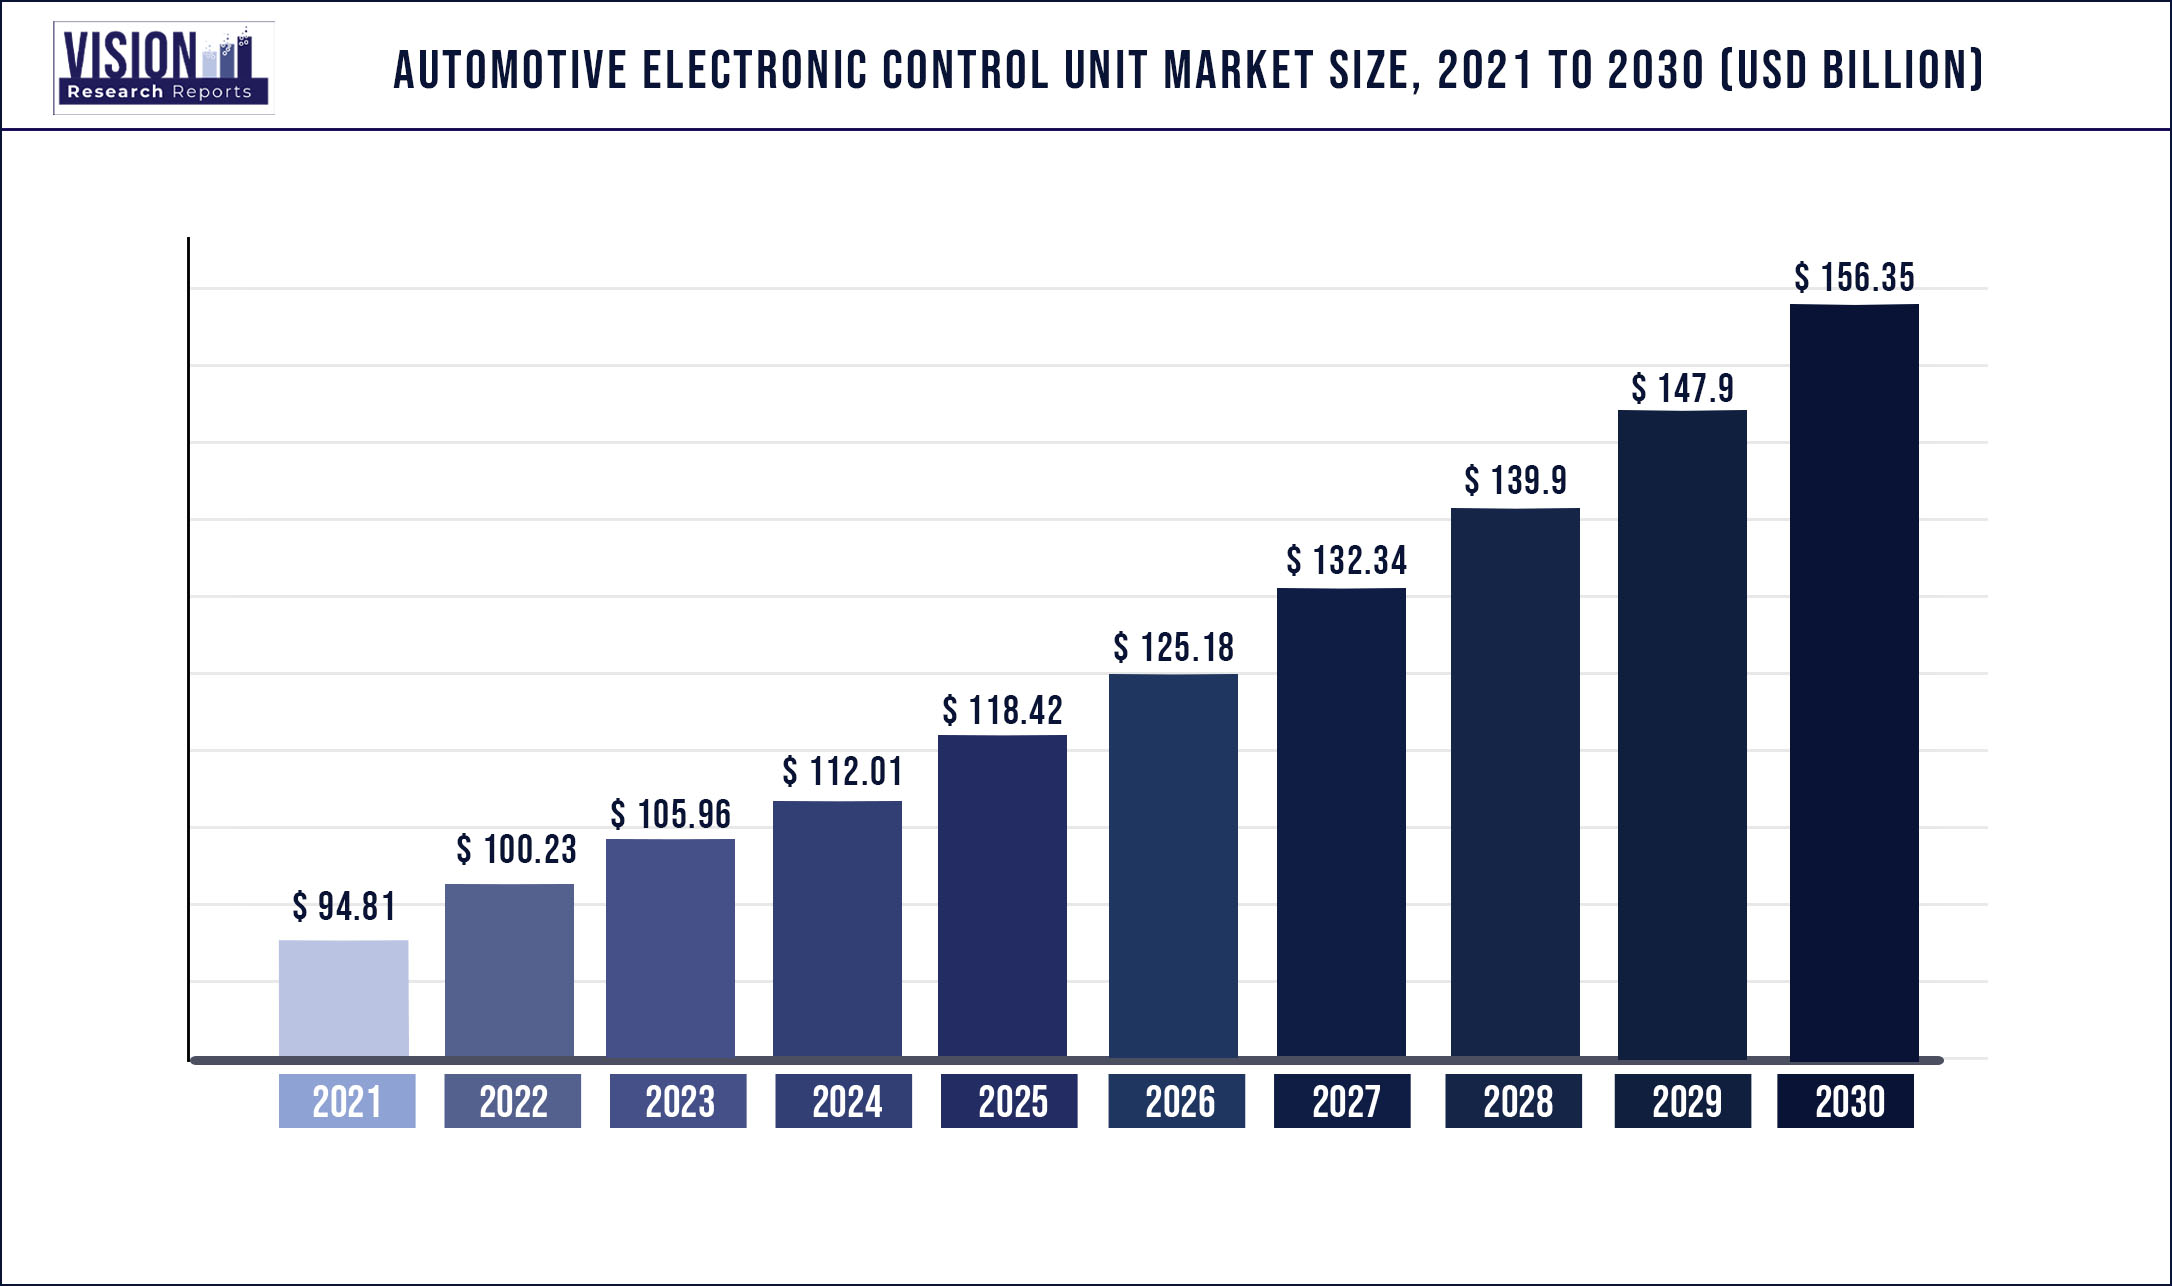 Automotive Electronic Control Unit Market Size 2021 to 2030